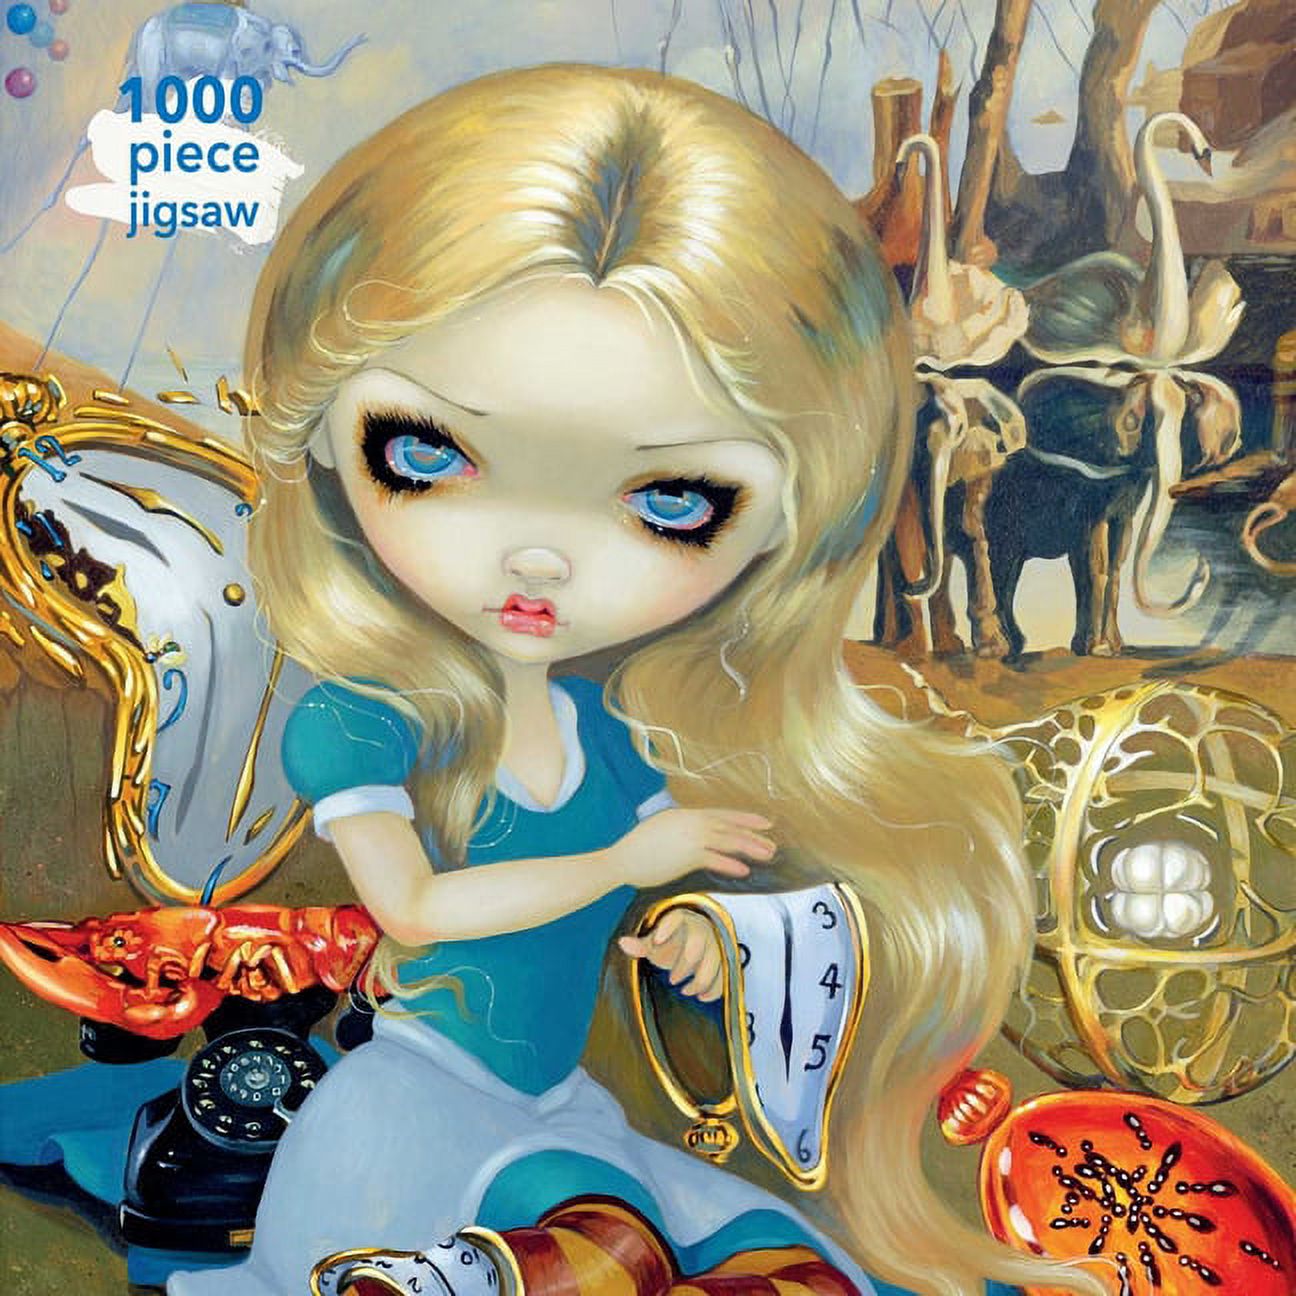 1000-piece Jigsaw Puzzles: Adult Jigsaw Puzzle Jasmine Becket-Griffith: Alice in a Dali Dream : 1000-piece Jigsaw Puzzles (Jigsaw) - image 1 of 3